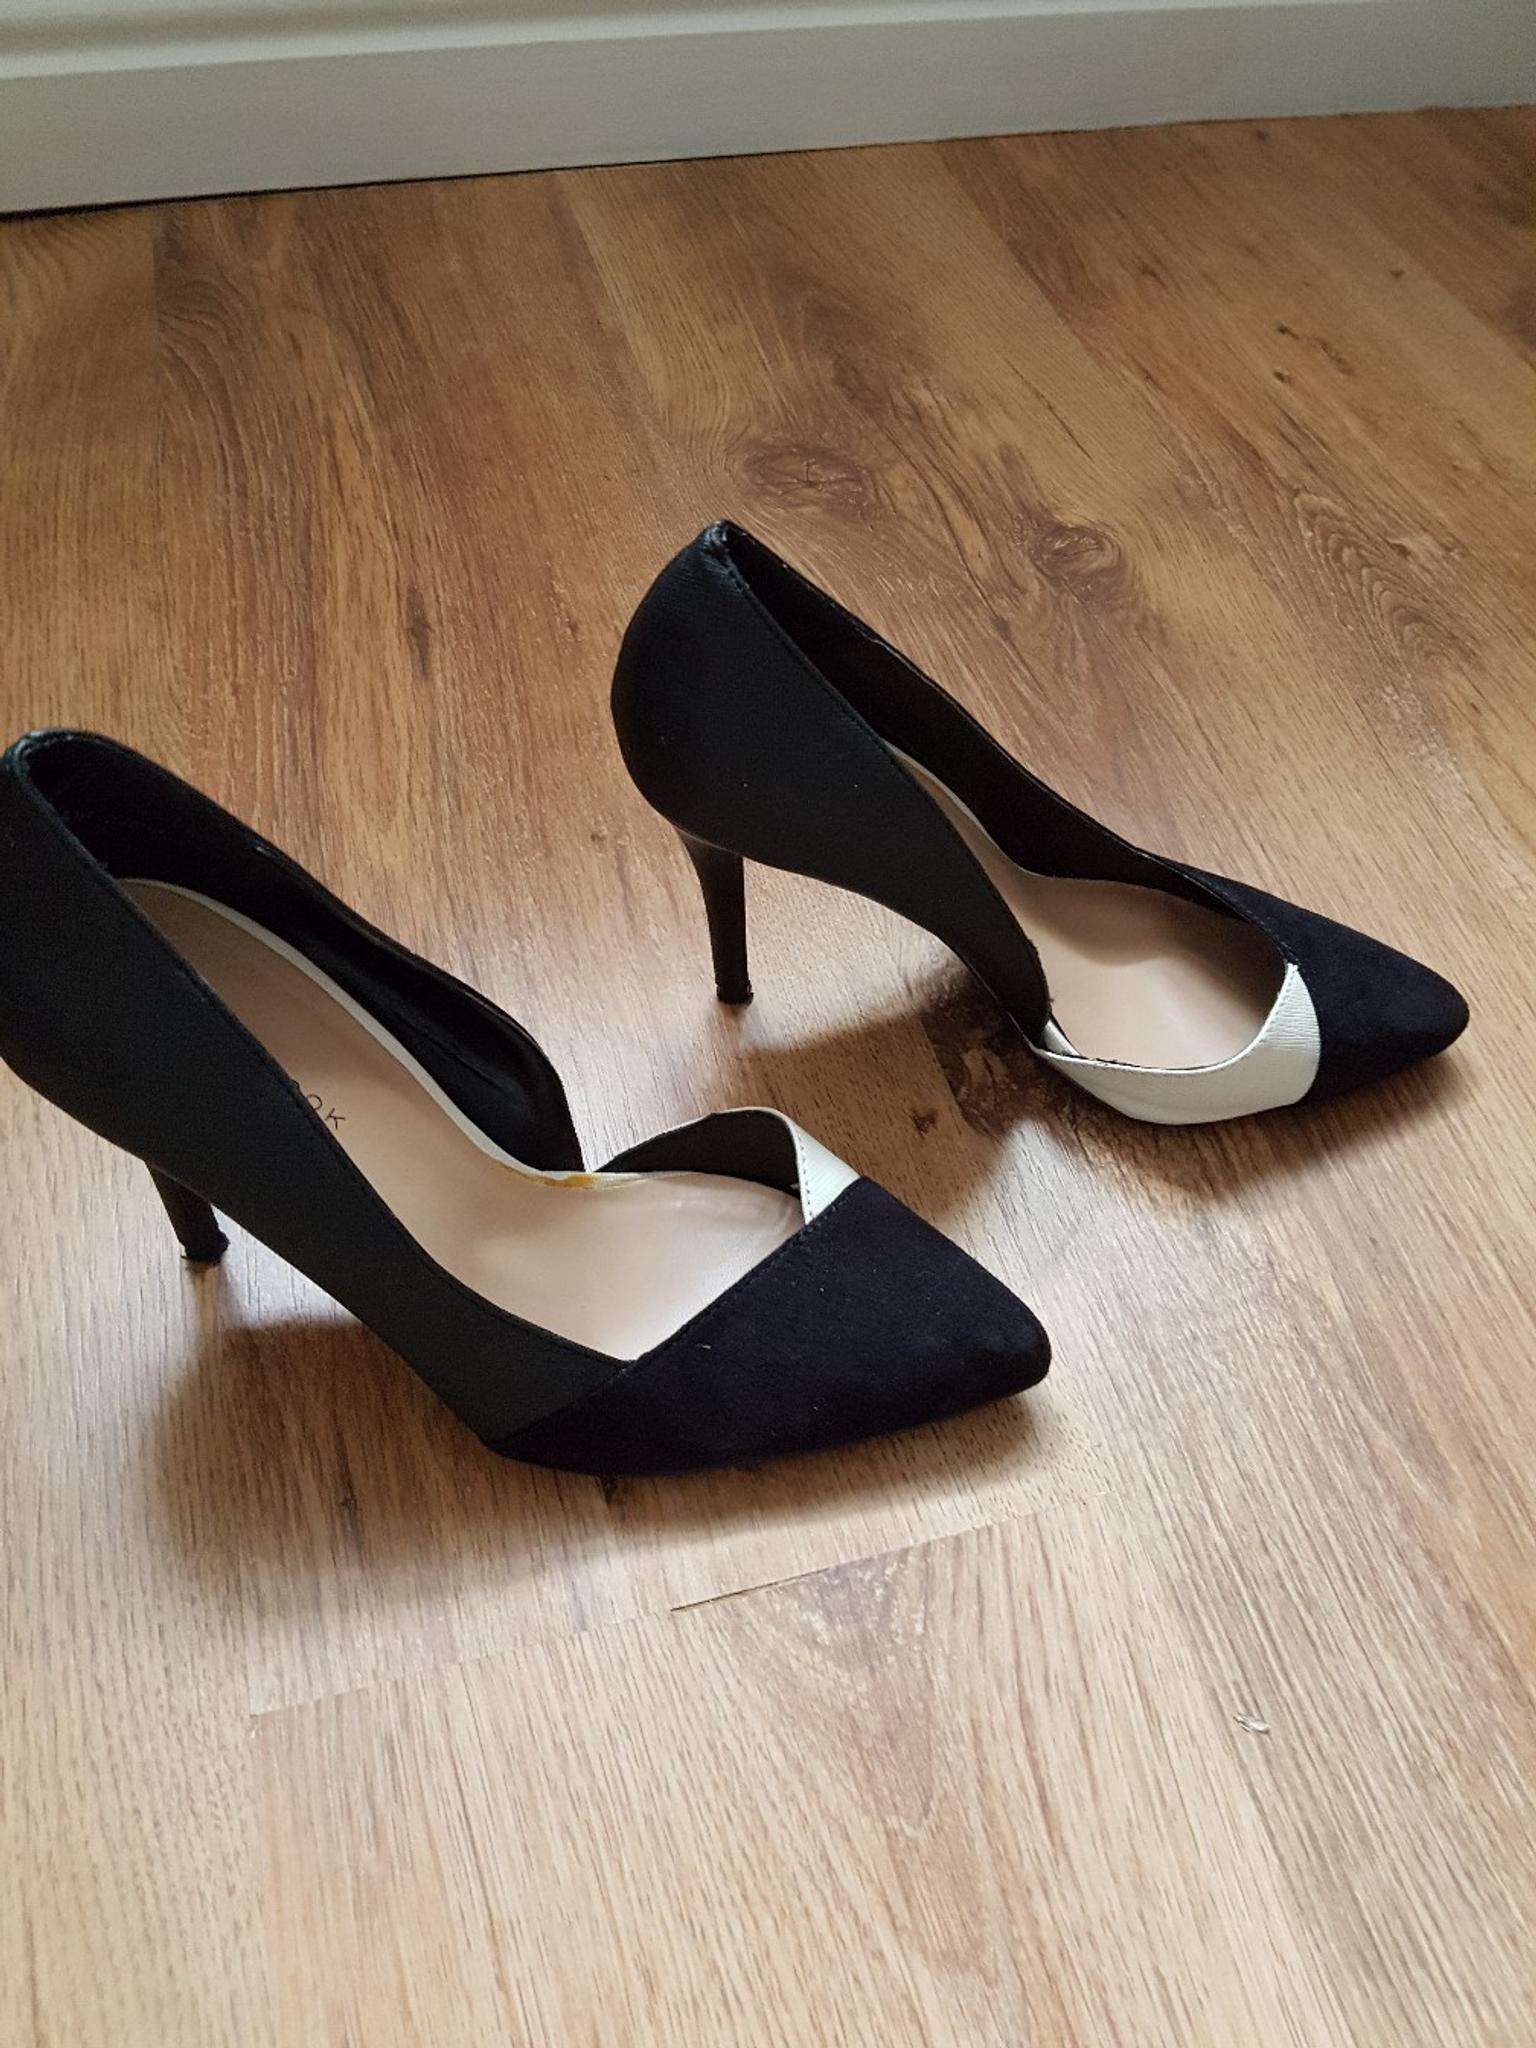 3 and a half inch heels